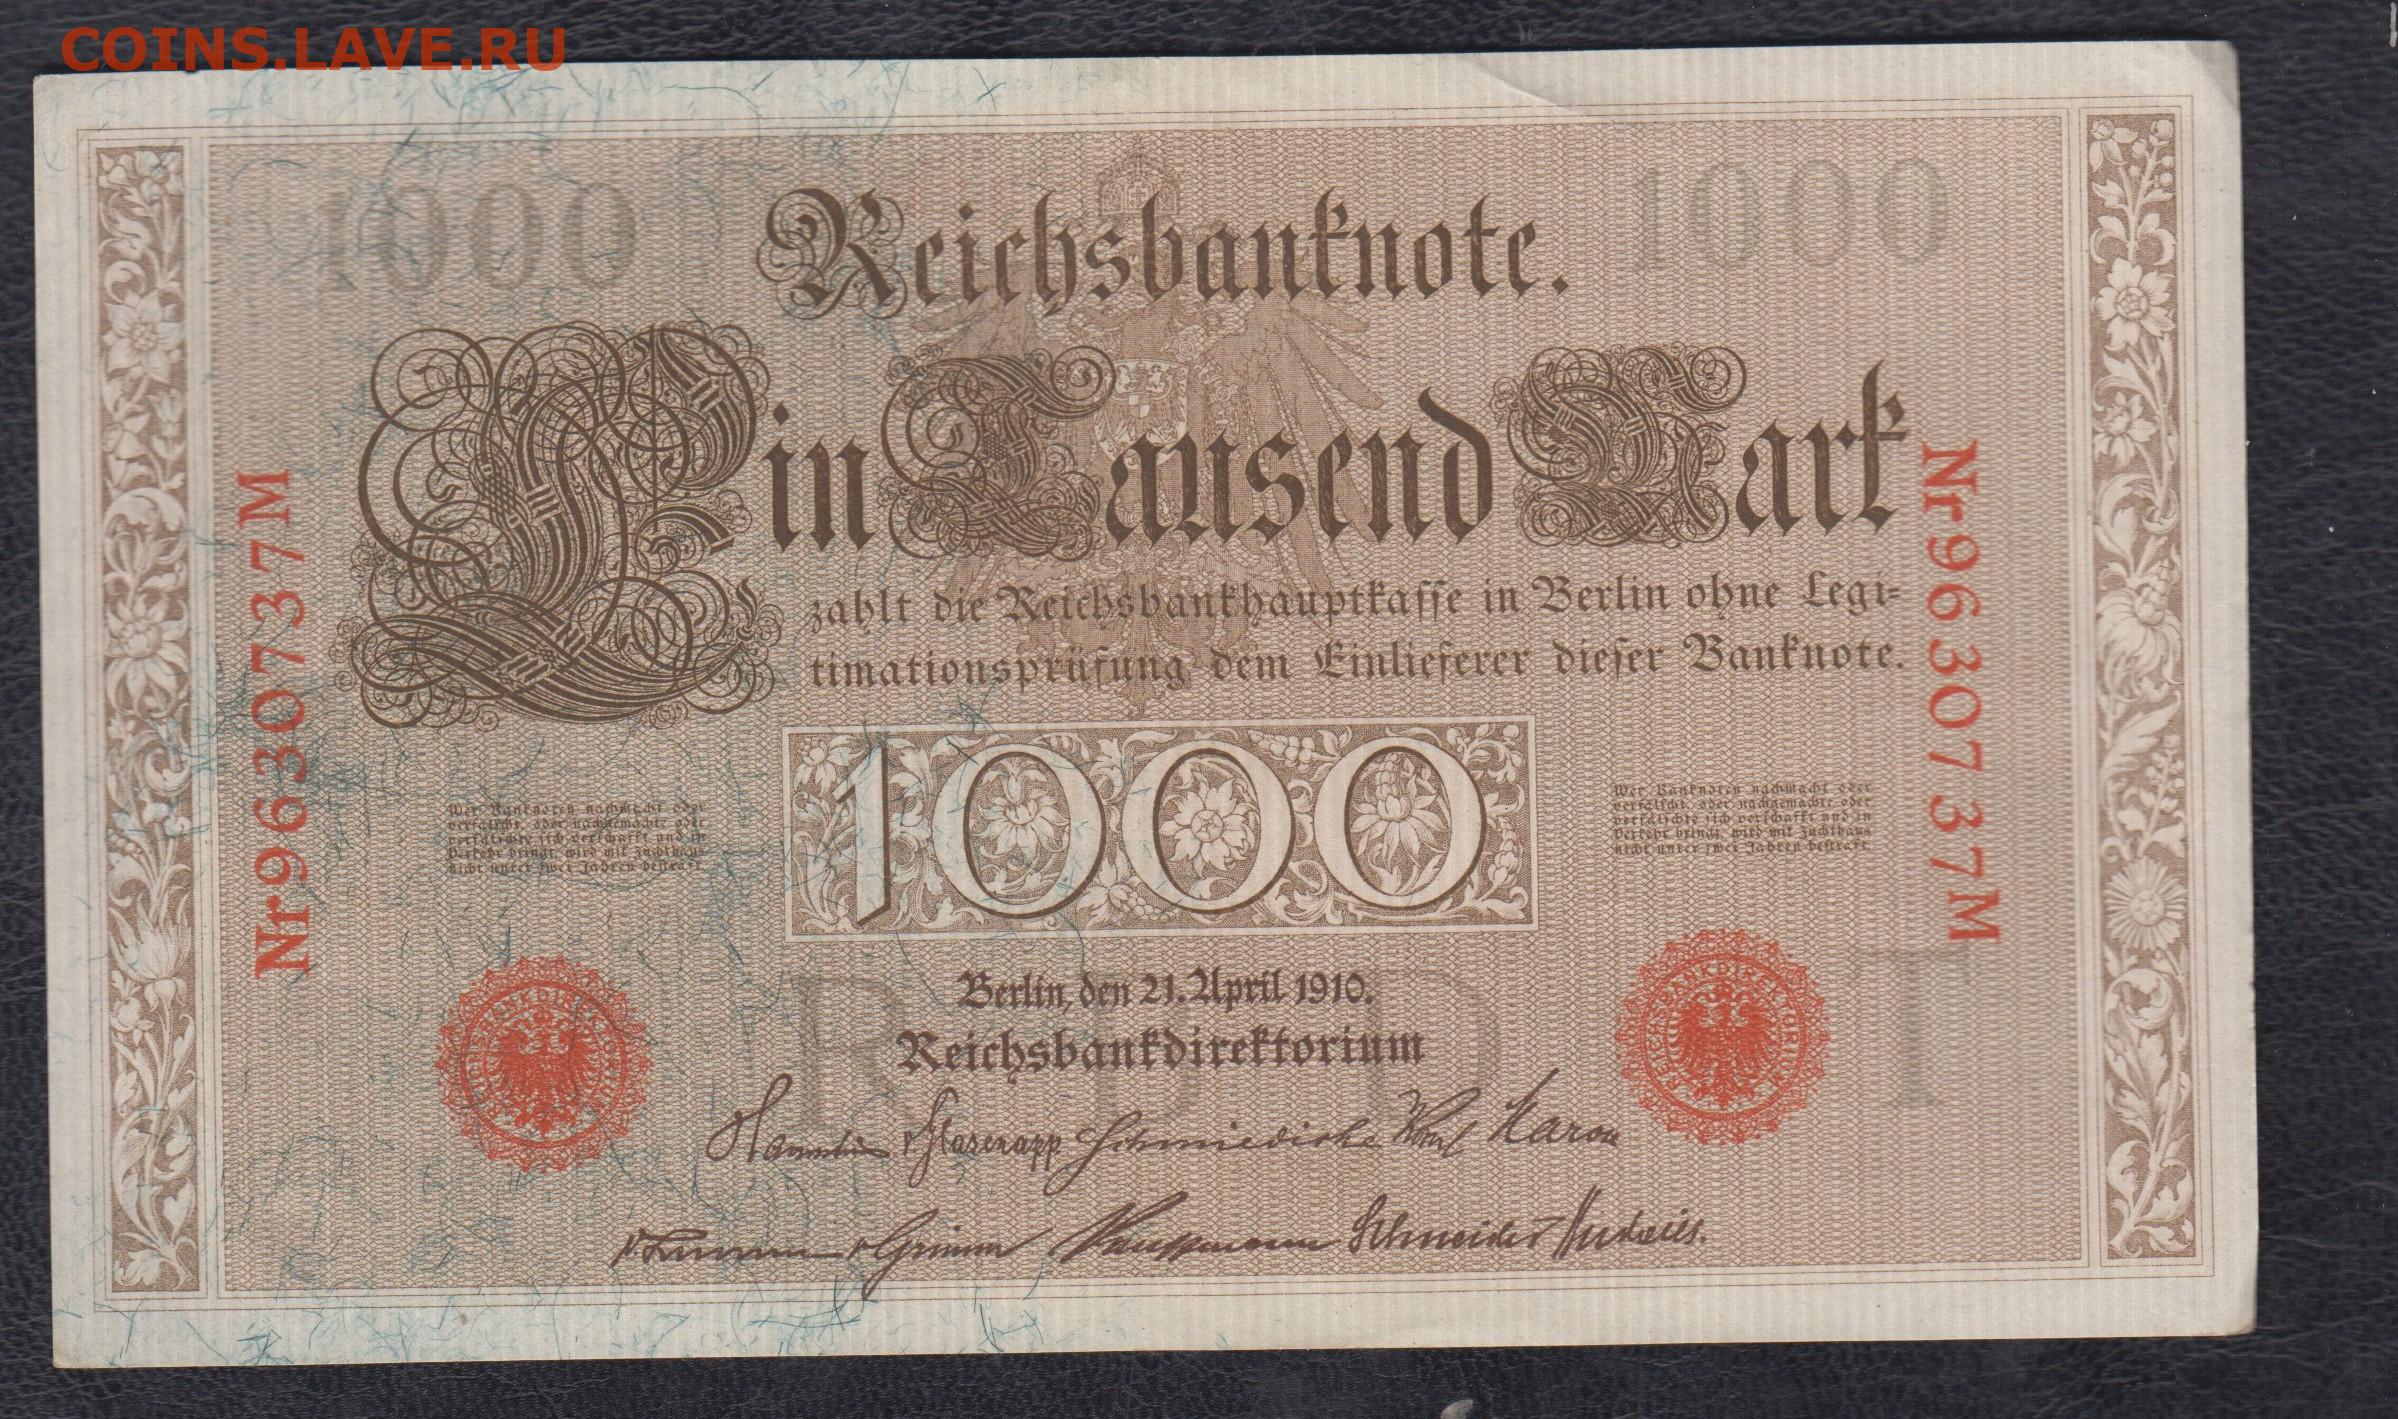 T me banknotes. 1000 Mark 1910. 1000 Марок 1910 год. Рейхсмарка банкнота 1910. 1000 Немецких марок купюра.